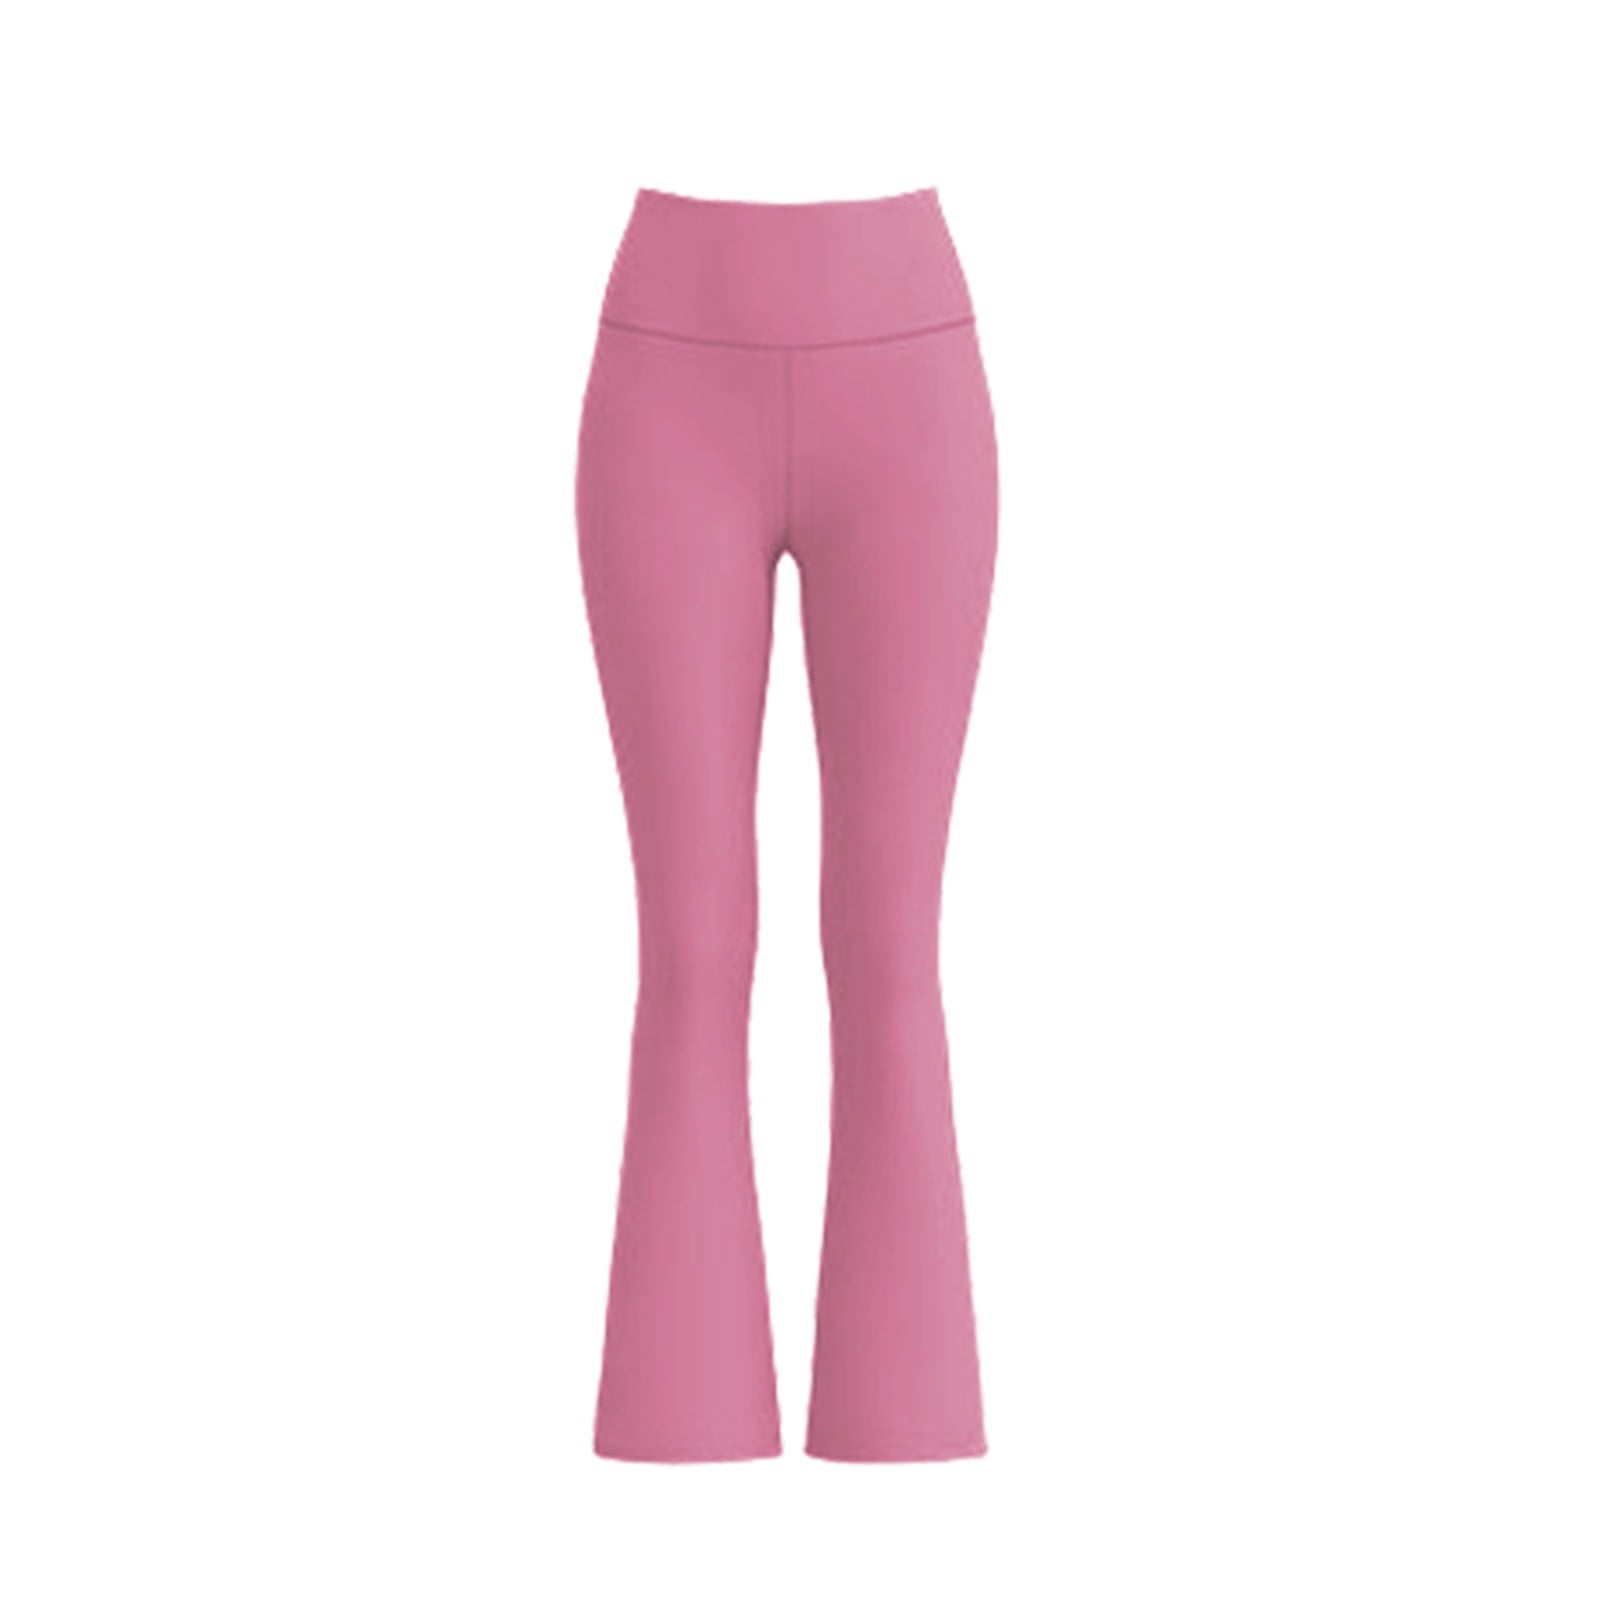 Bell Bottom Pants Floral Pink Print Girls – Bee You Treasures